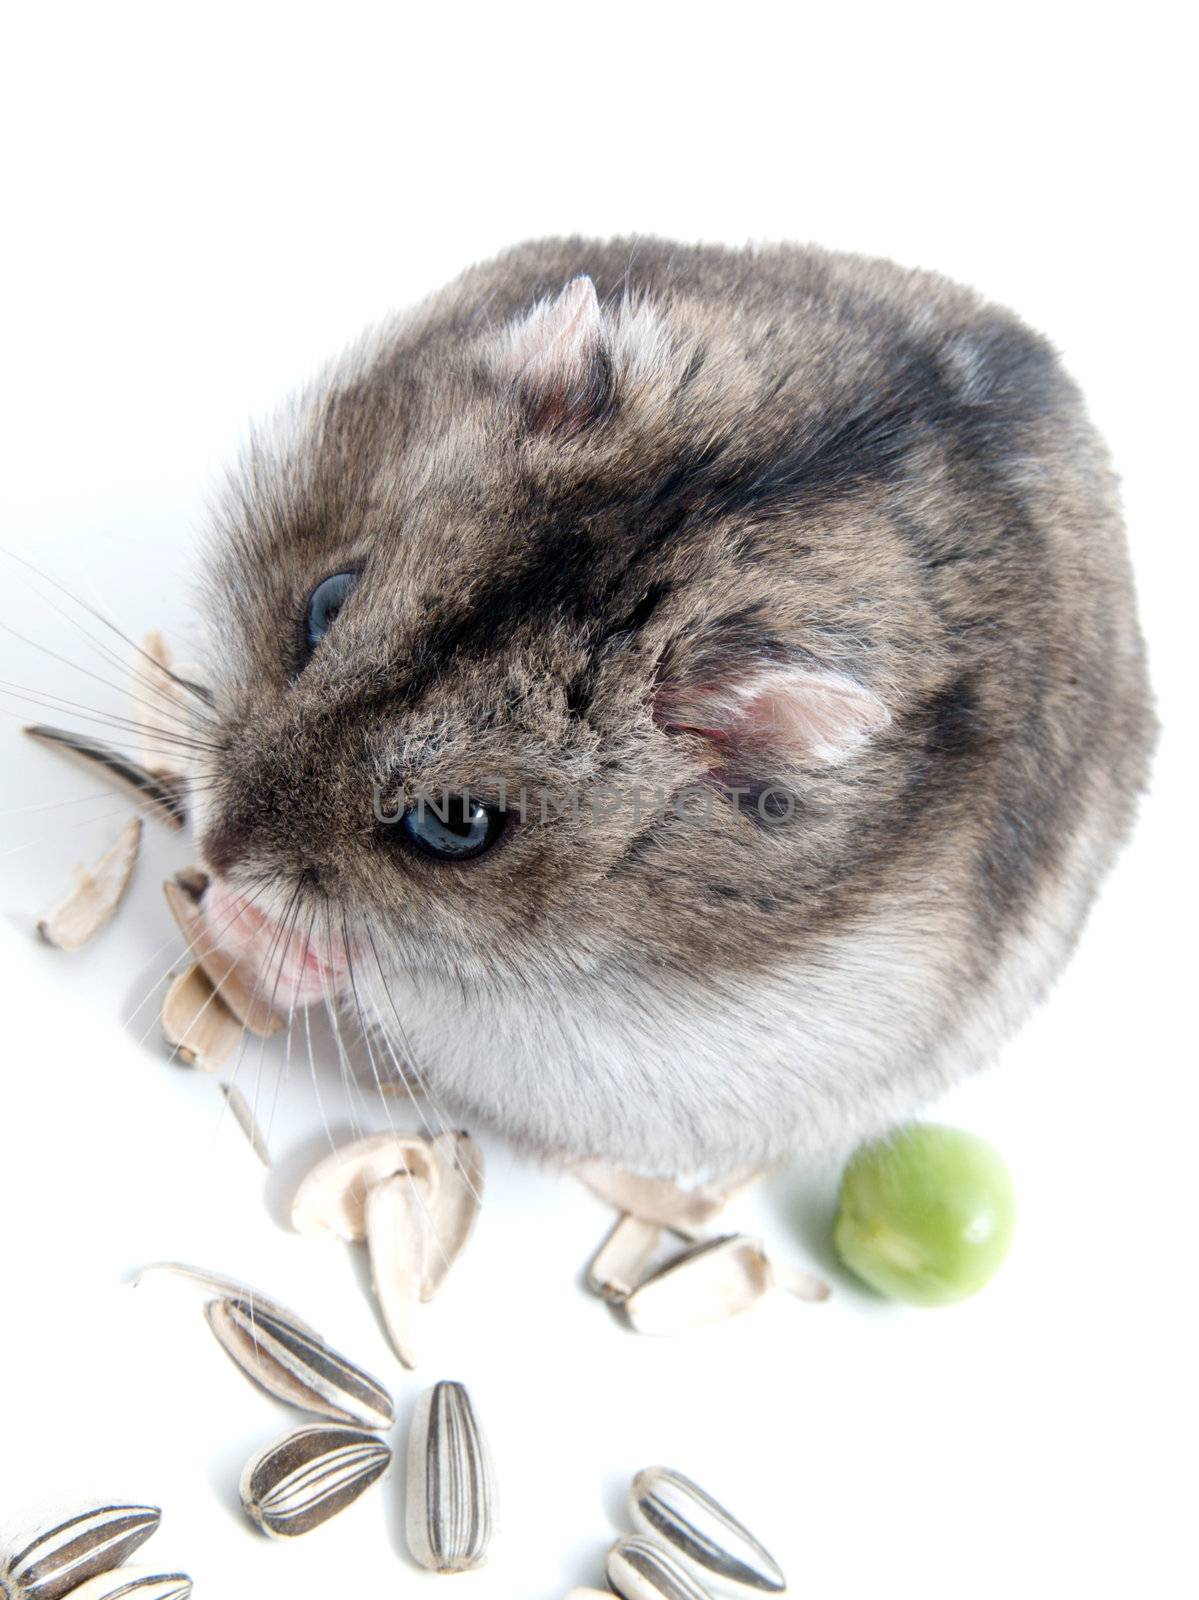 Dwarf hamster clicks sunflower seeds on white background  by motorolka